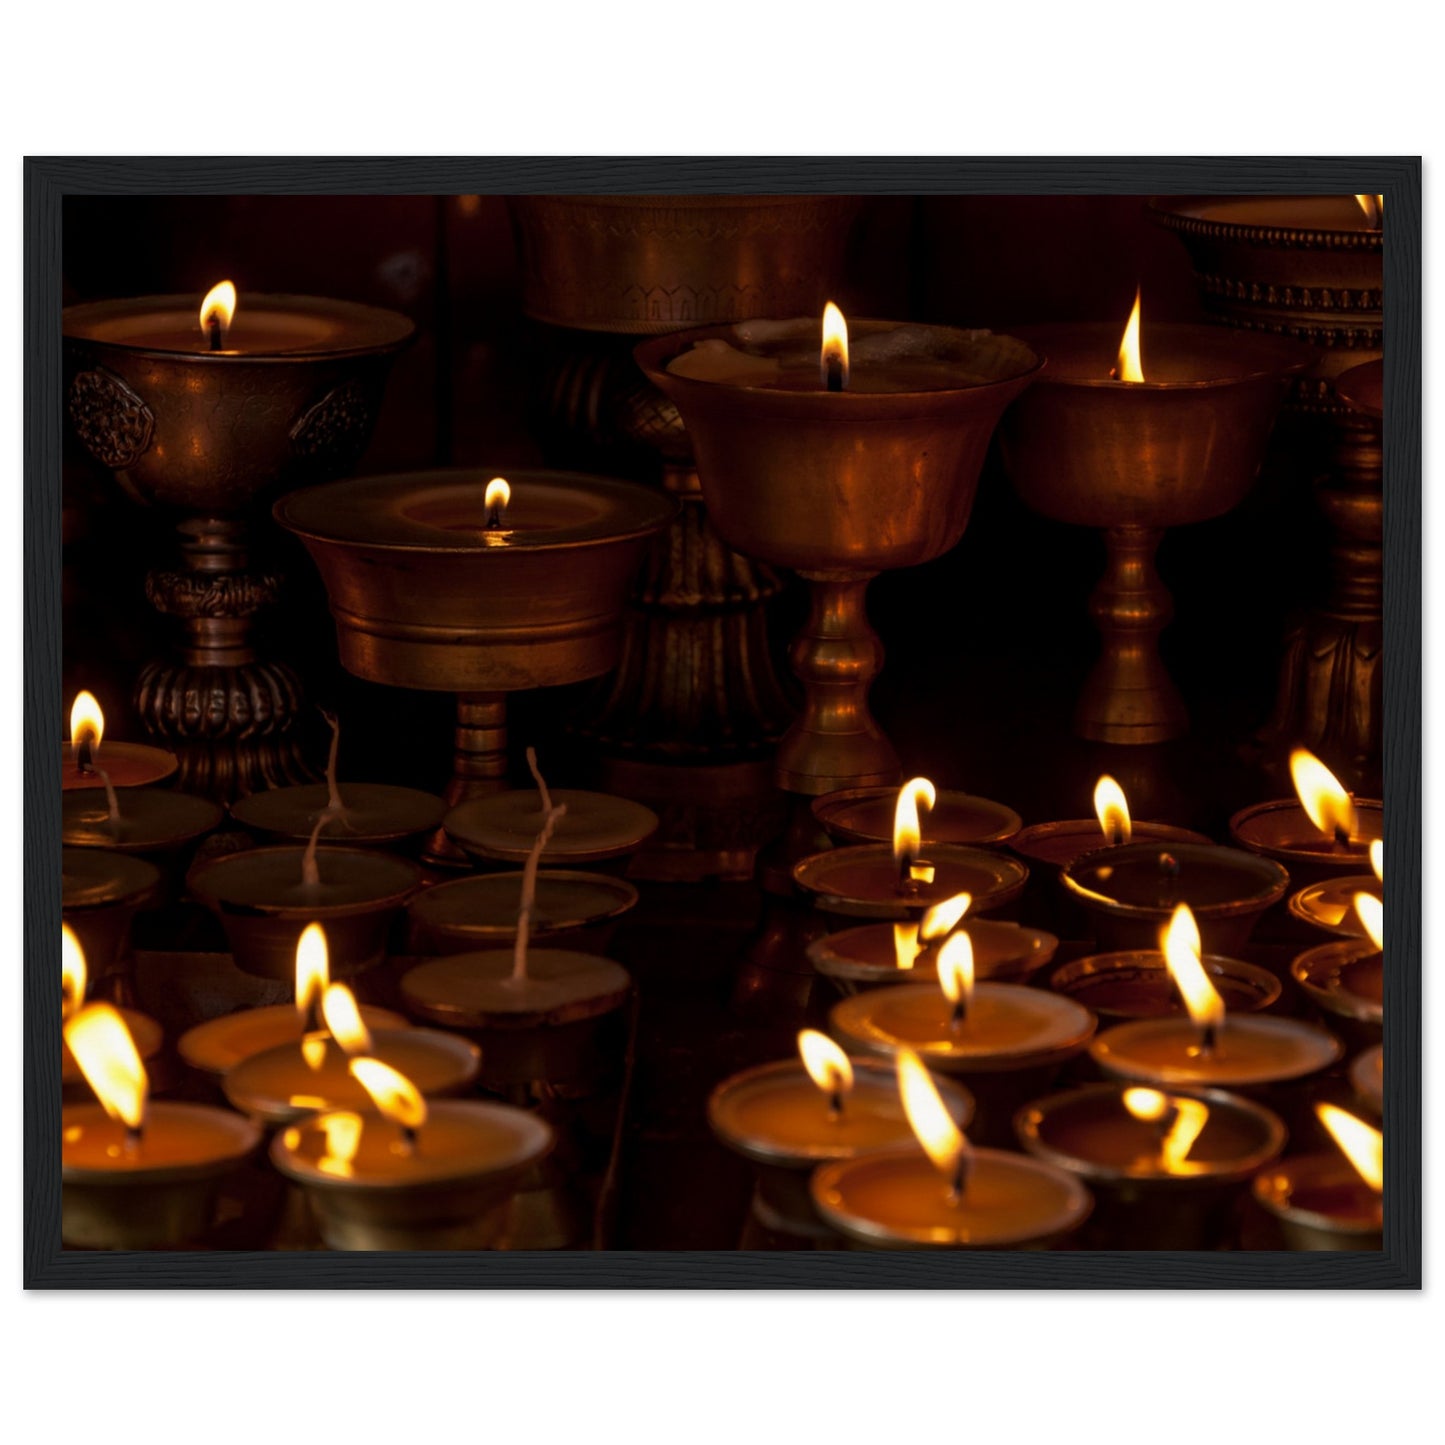 Lit candles at the monkey temple of Kathmandu